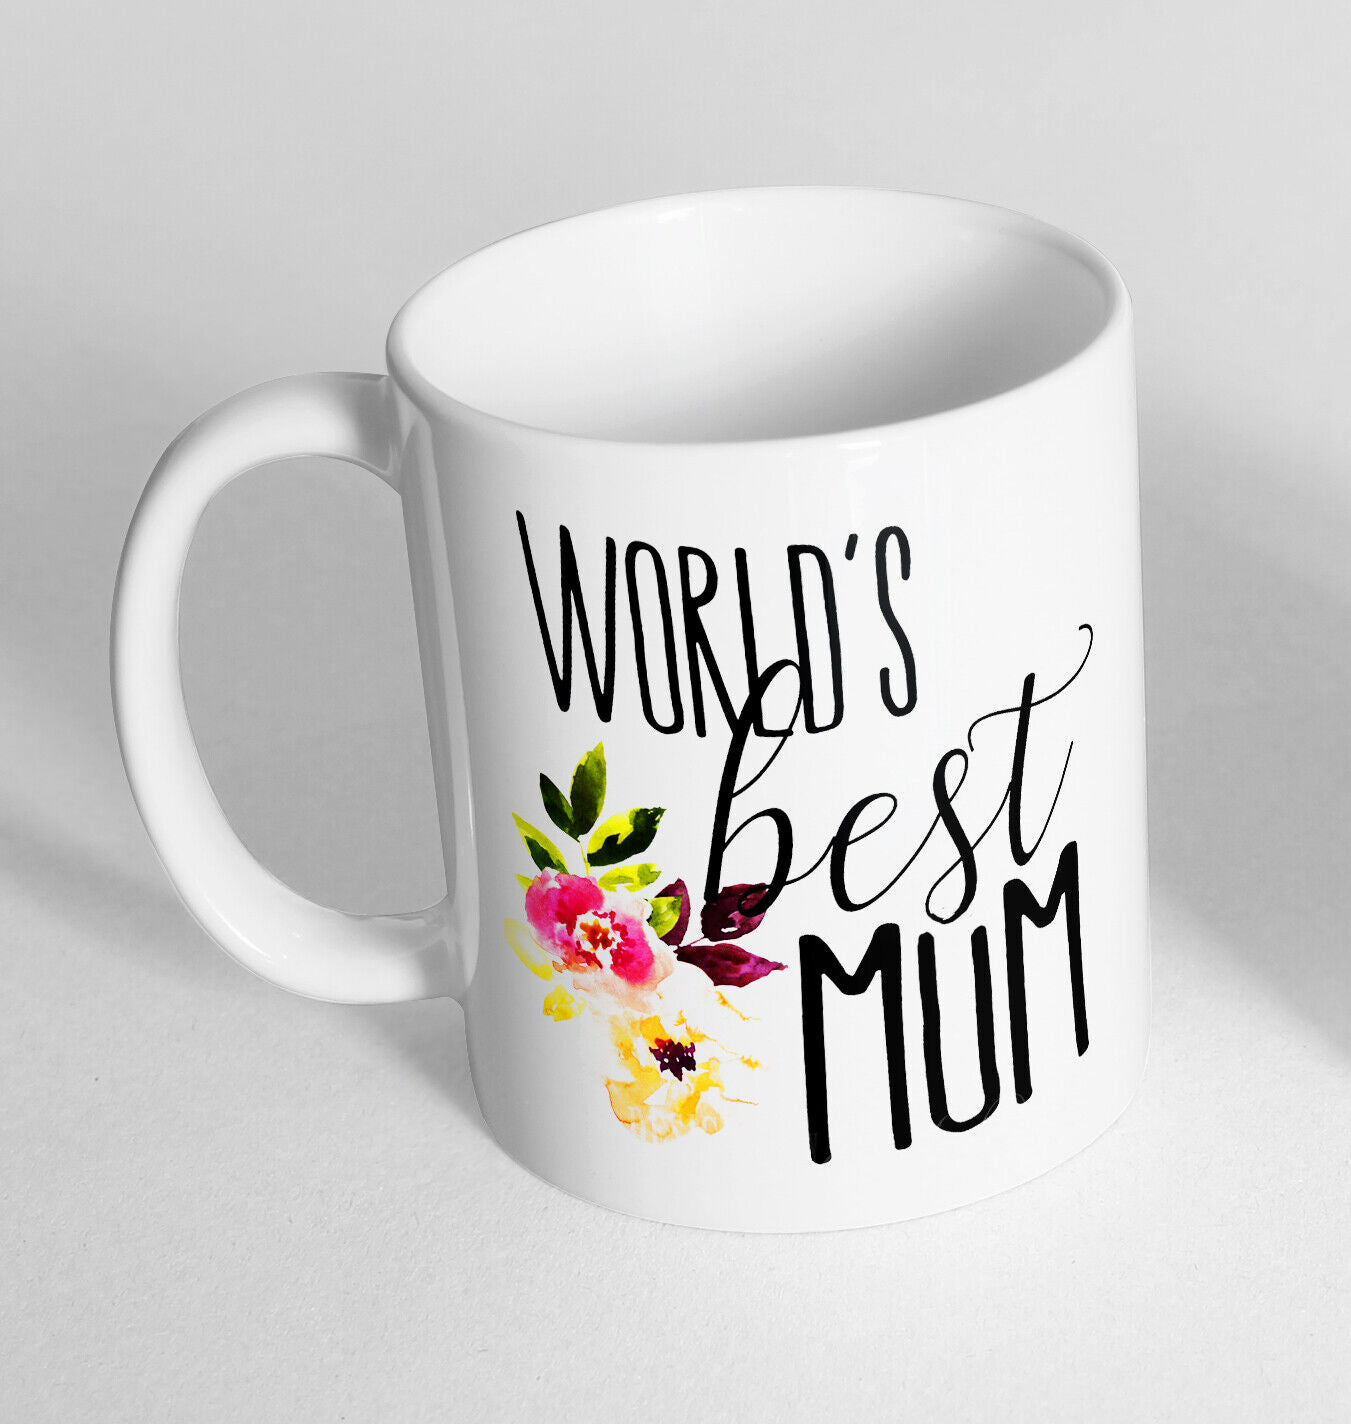 Mum Mothers Day Birthday Novelty Mug Ceramic Cup Funny Gift Tea Coffee 2